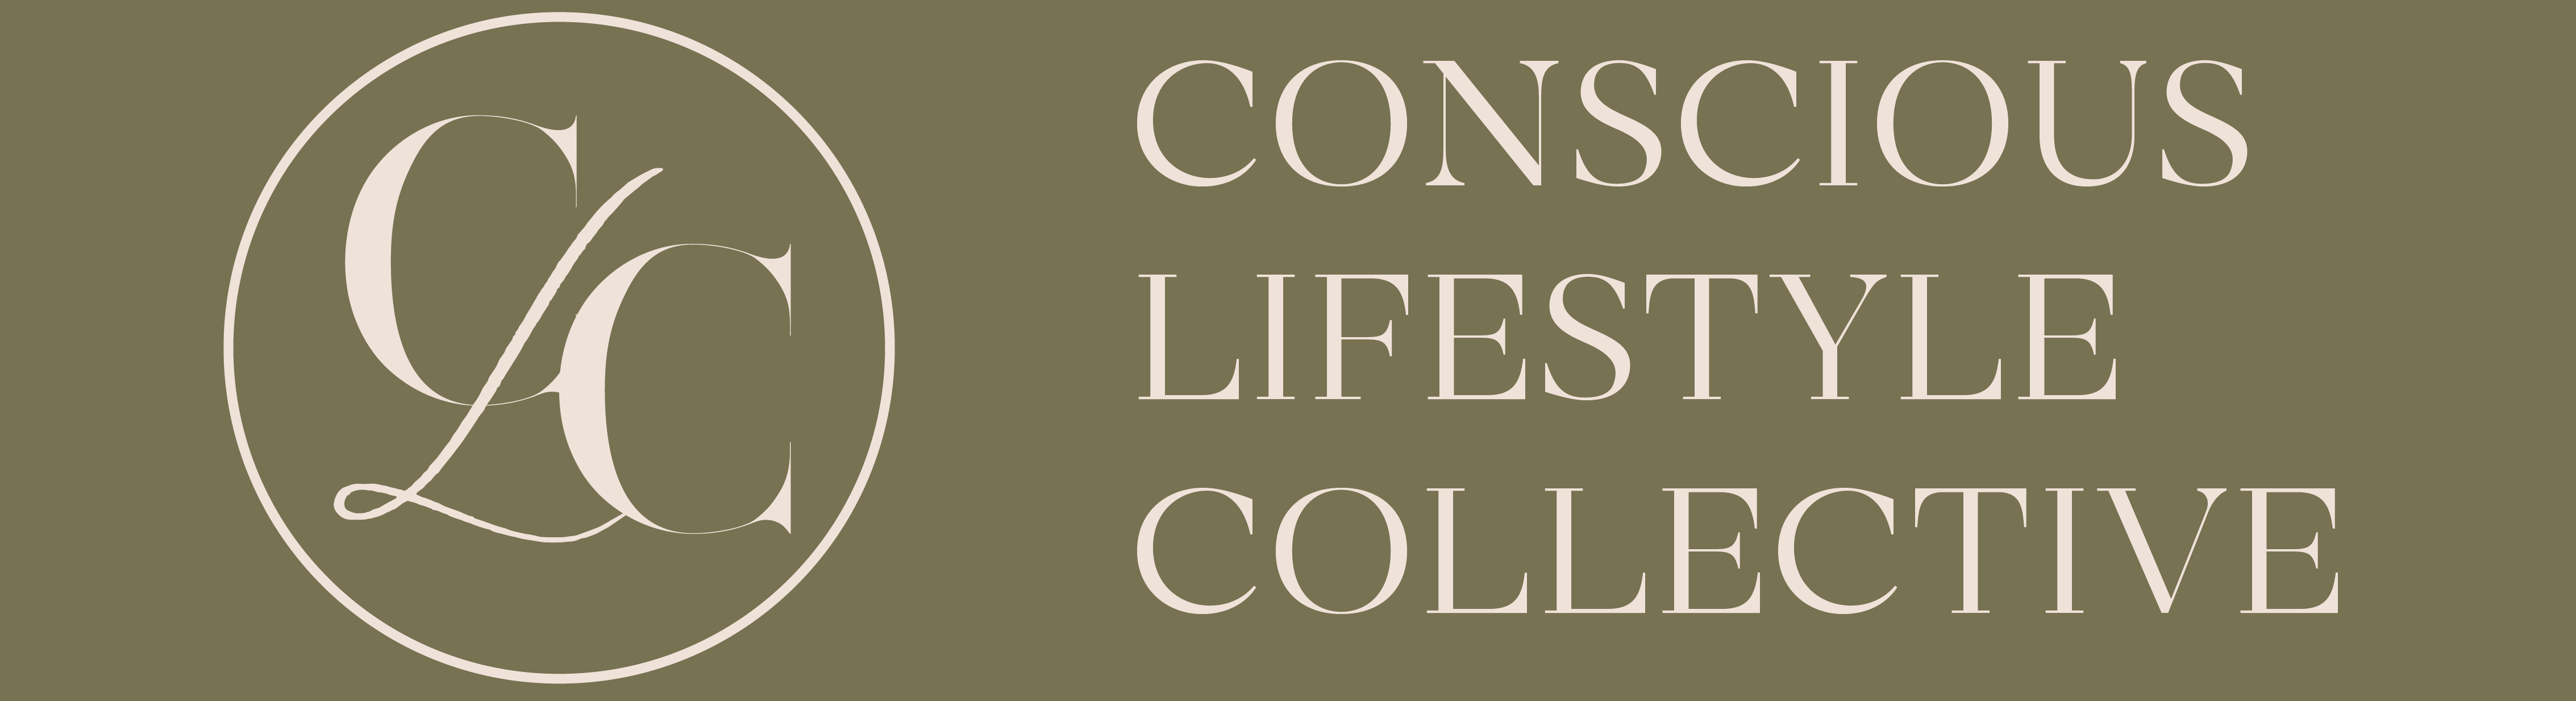 conscious lifestyle collective